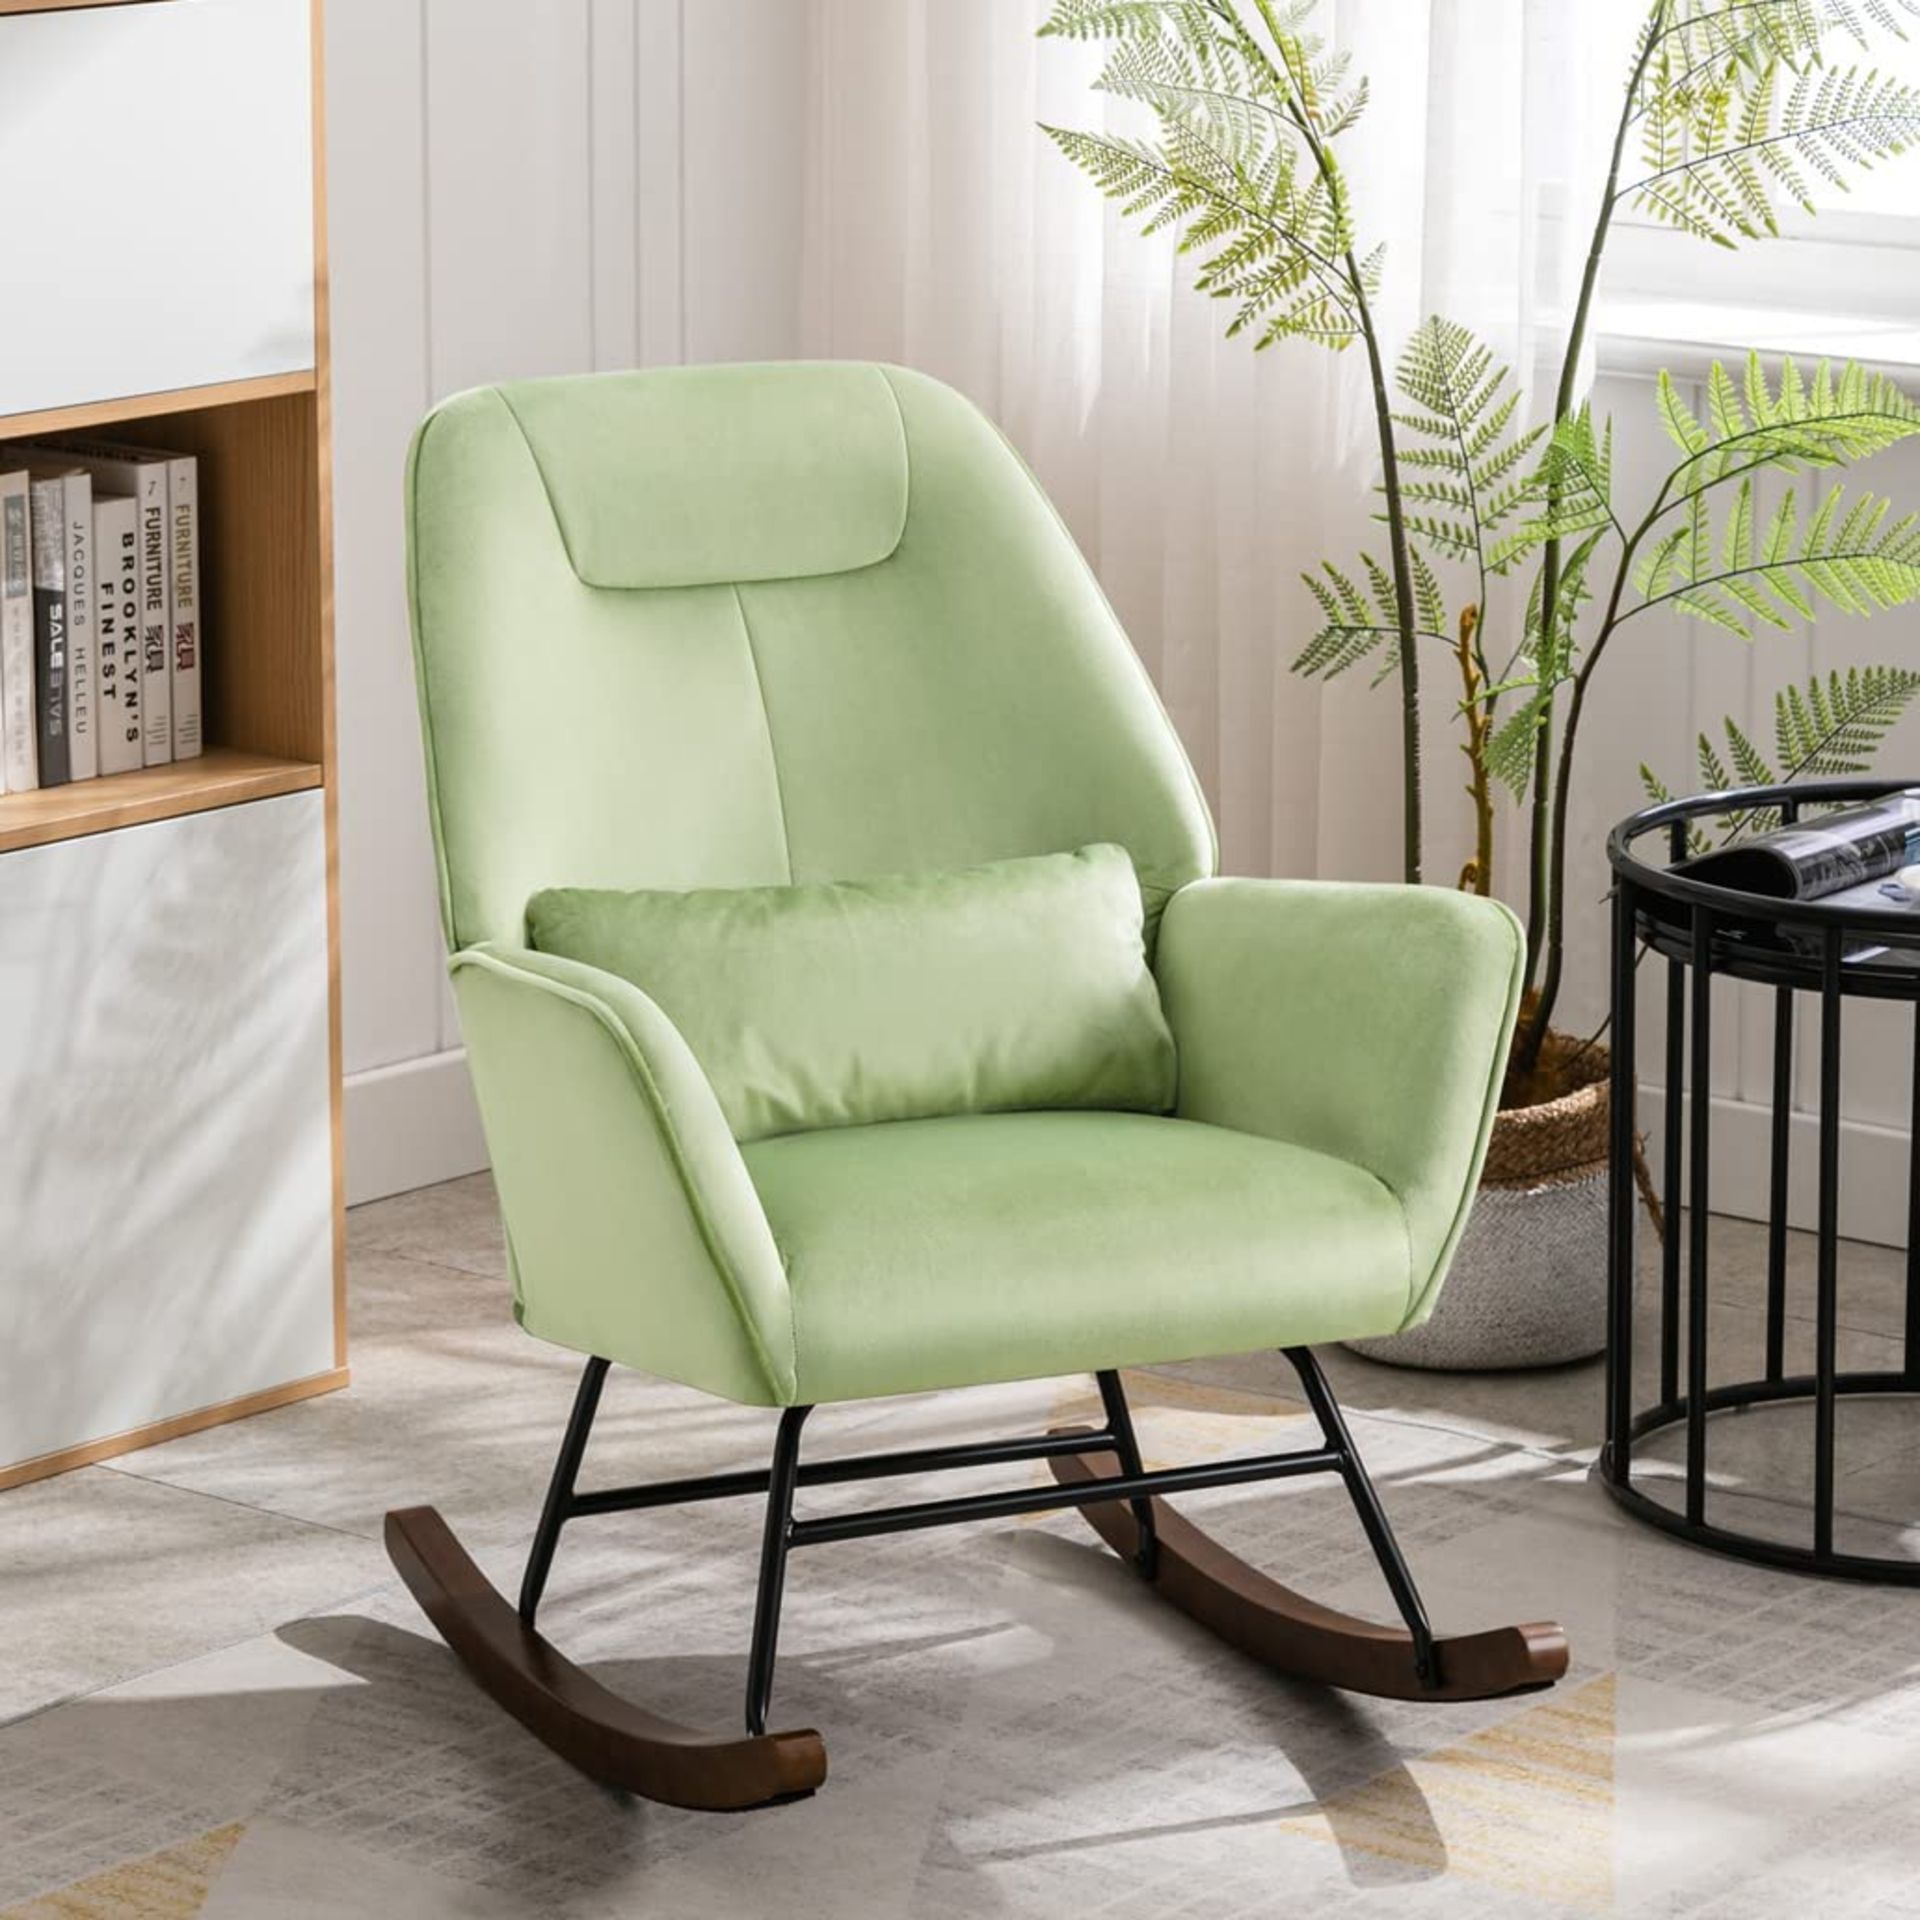 NEW HomeMiYN Velvet Nursery Rocking Chair, Upholstered Reading Wingback Accent Chair for Baby